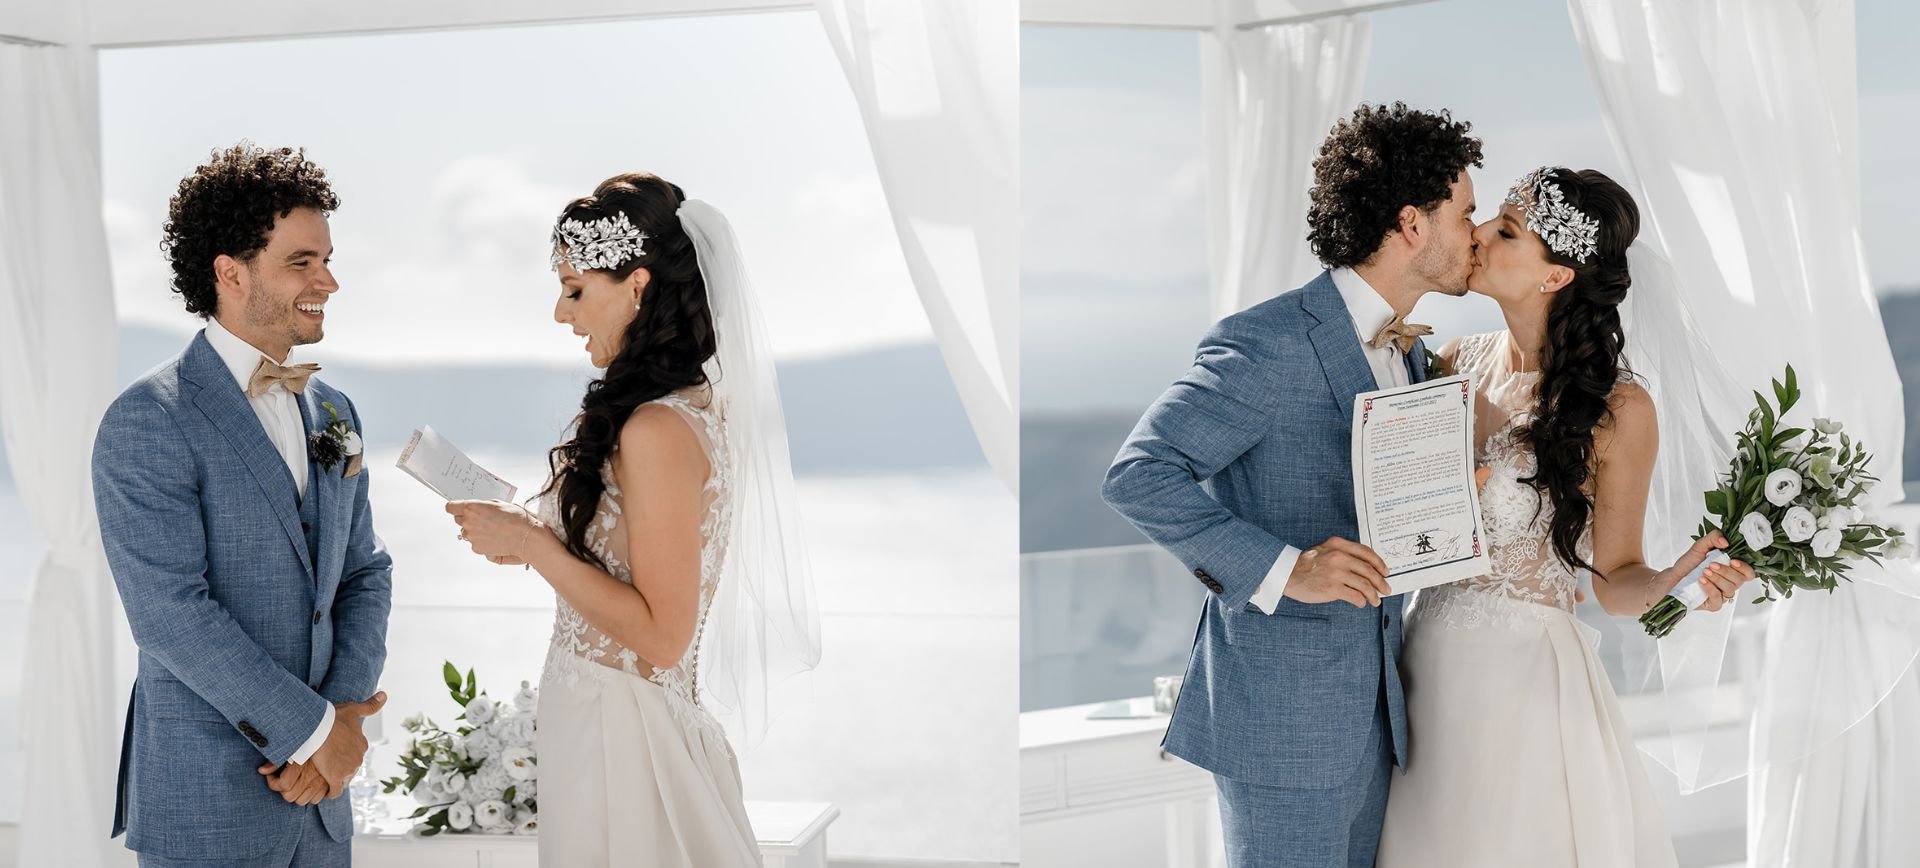 santorini greece wedding venue planning photography package